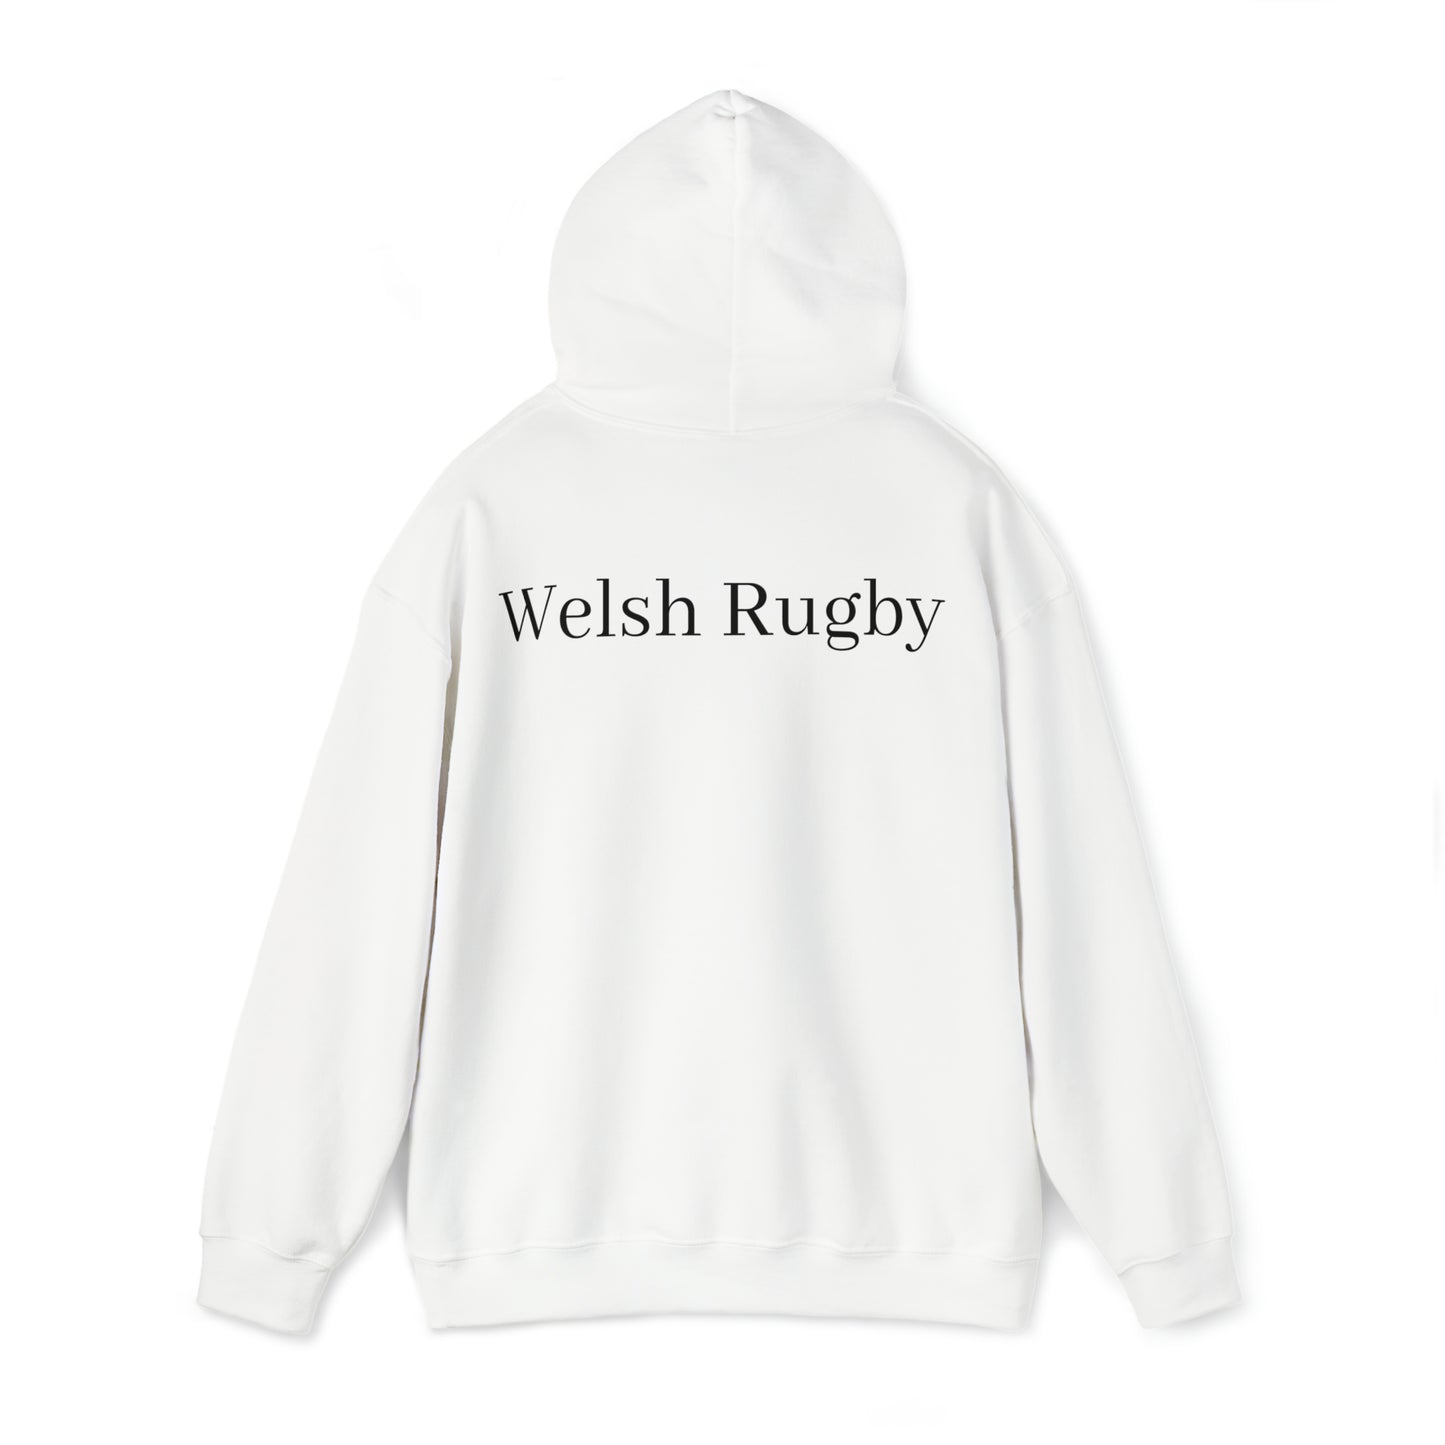 Post Match Wales - light hoodies